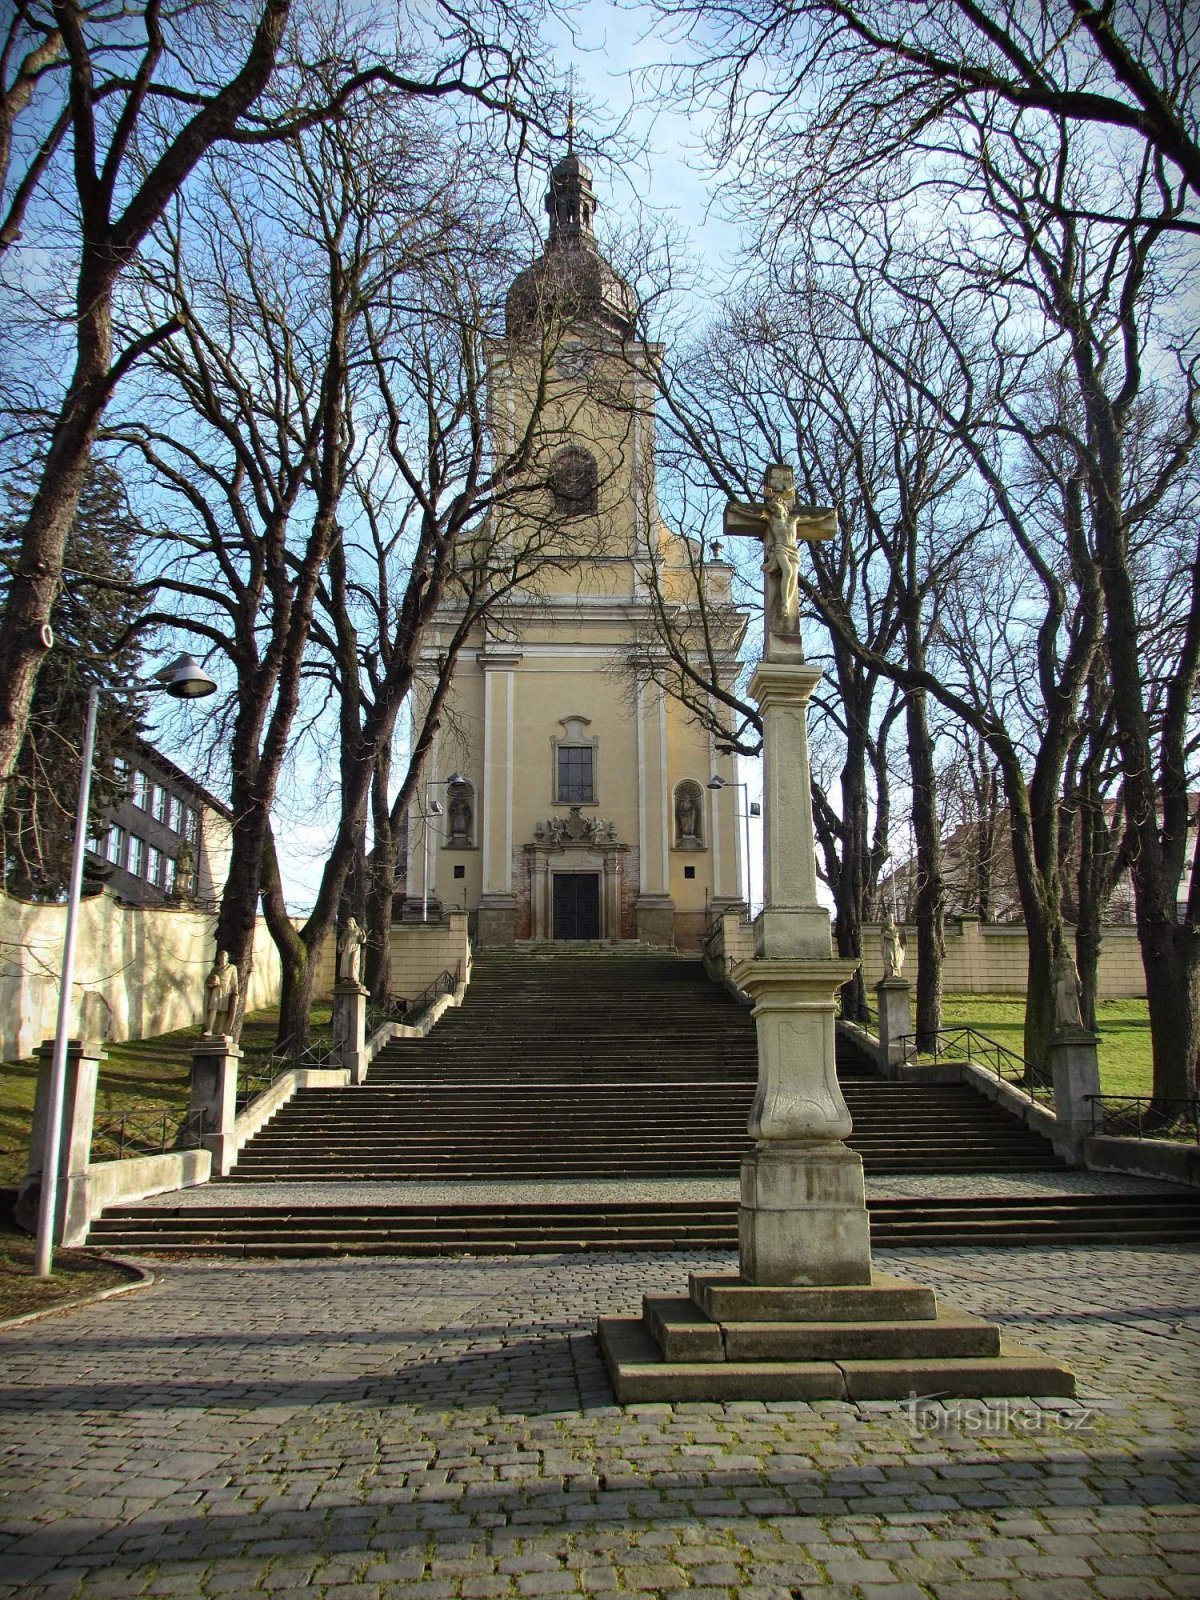 Napajedelský nhà thờ St. Bartholomew